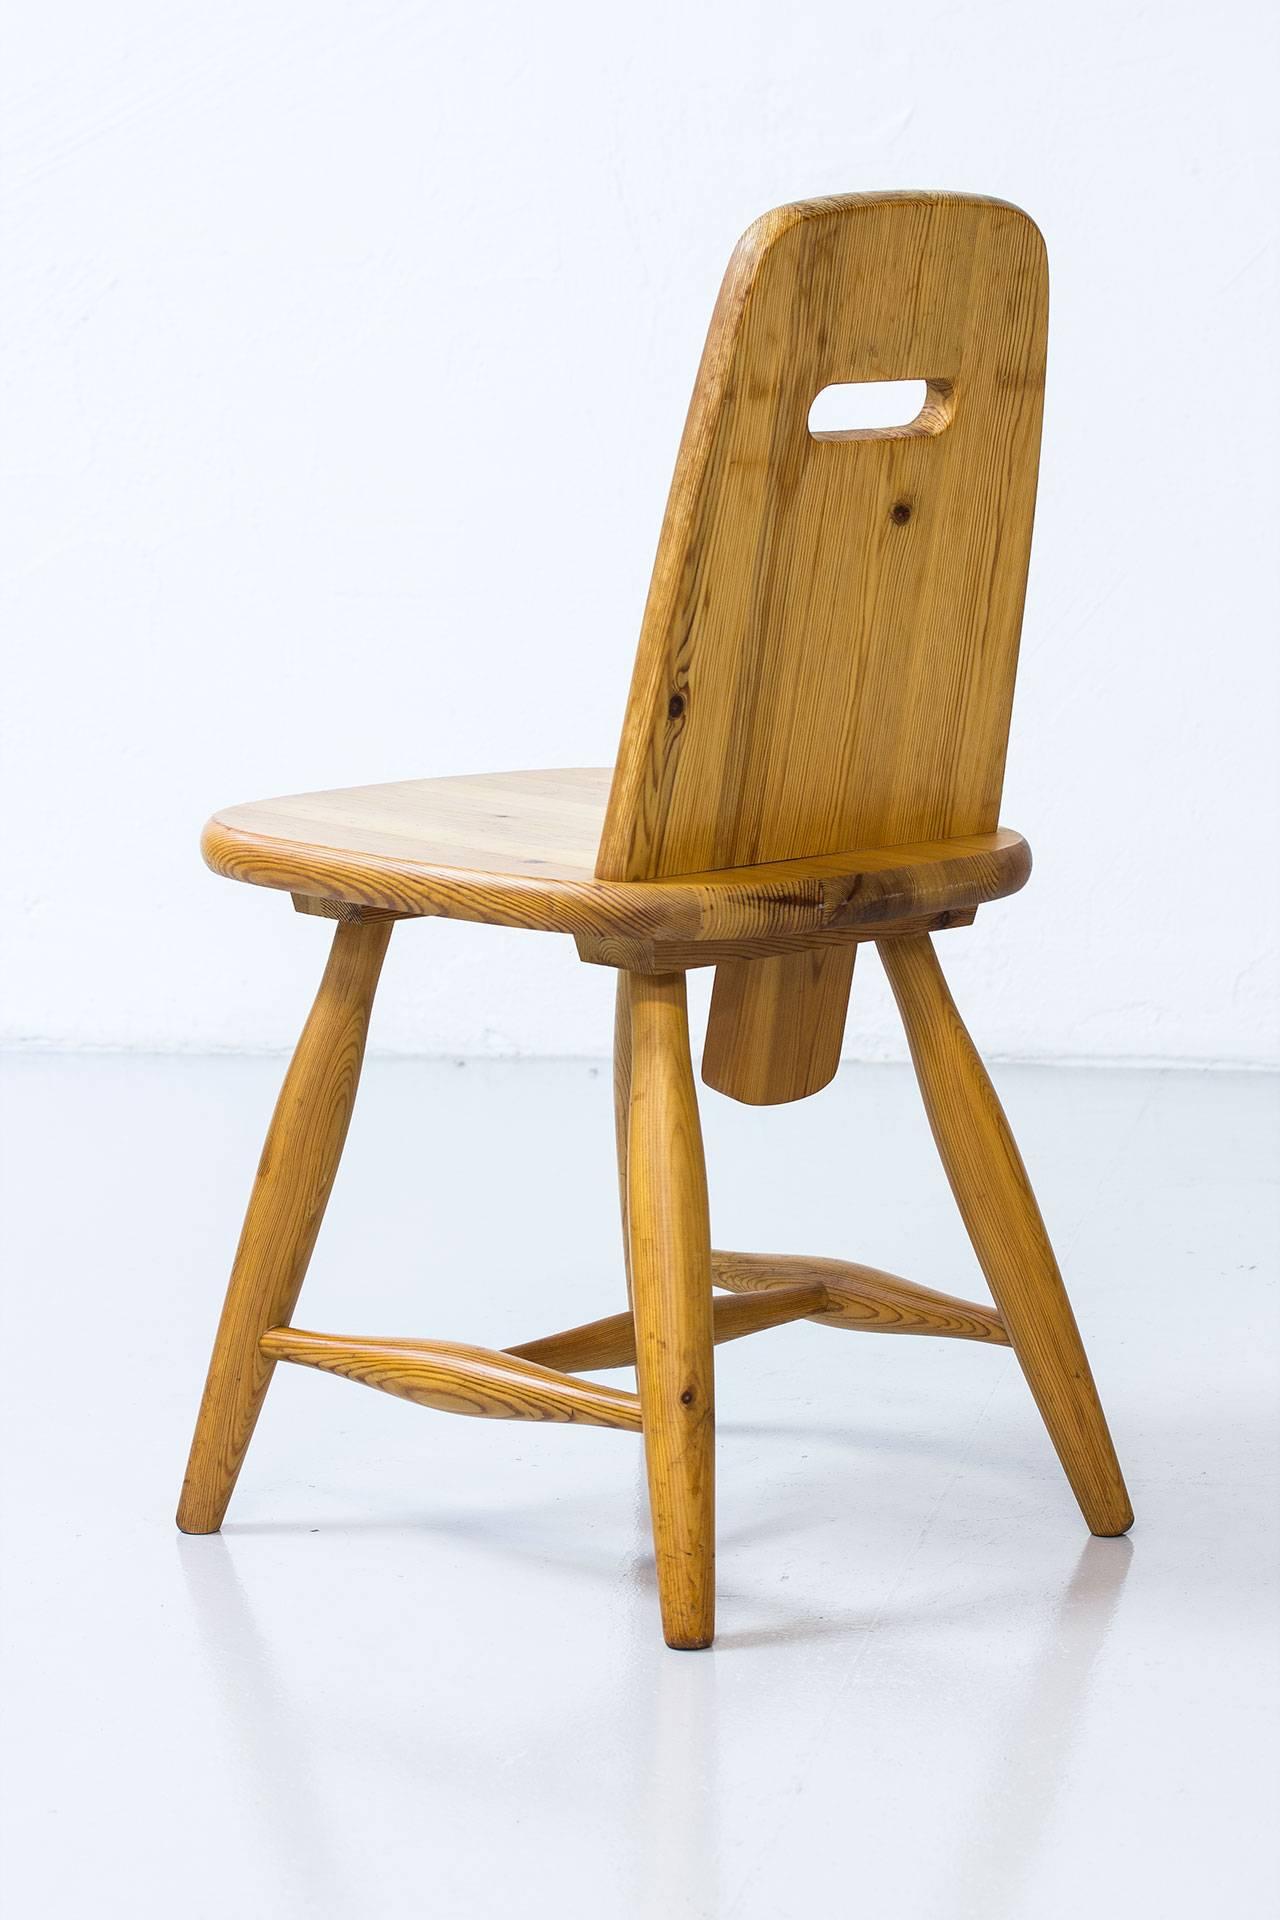 Finnish Set of Scandinavian Pine Chairs 